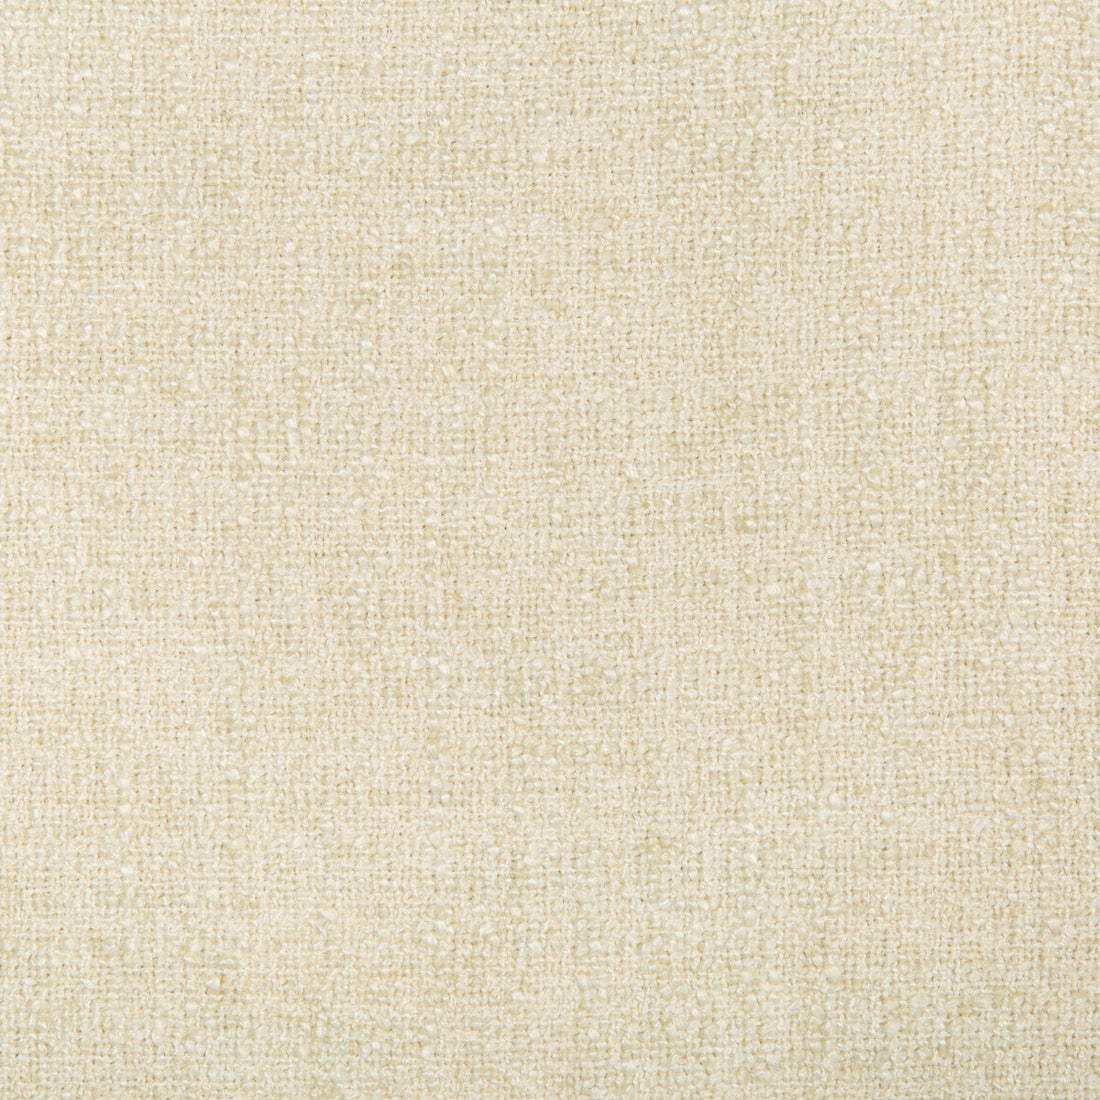 Kravet Smart fabric in 35147-1 color - pattern 35147.1.0 - by Kravet Smart